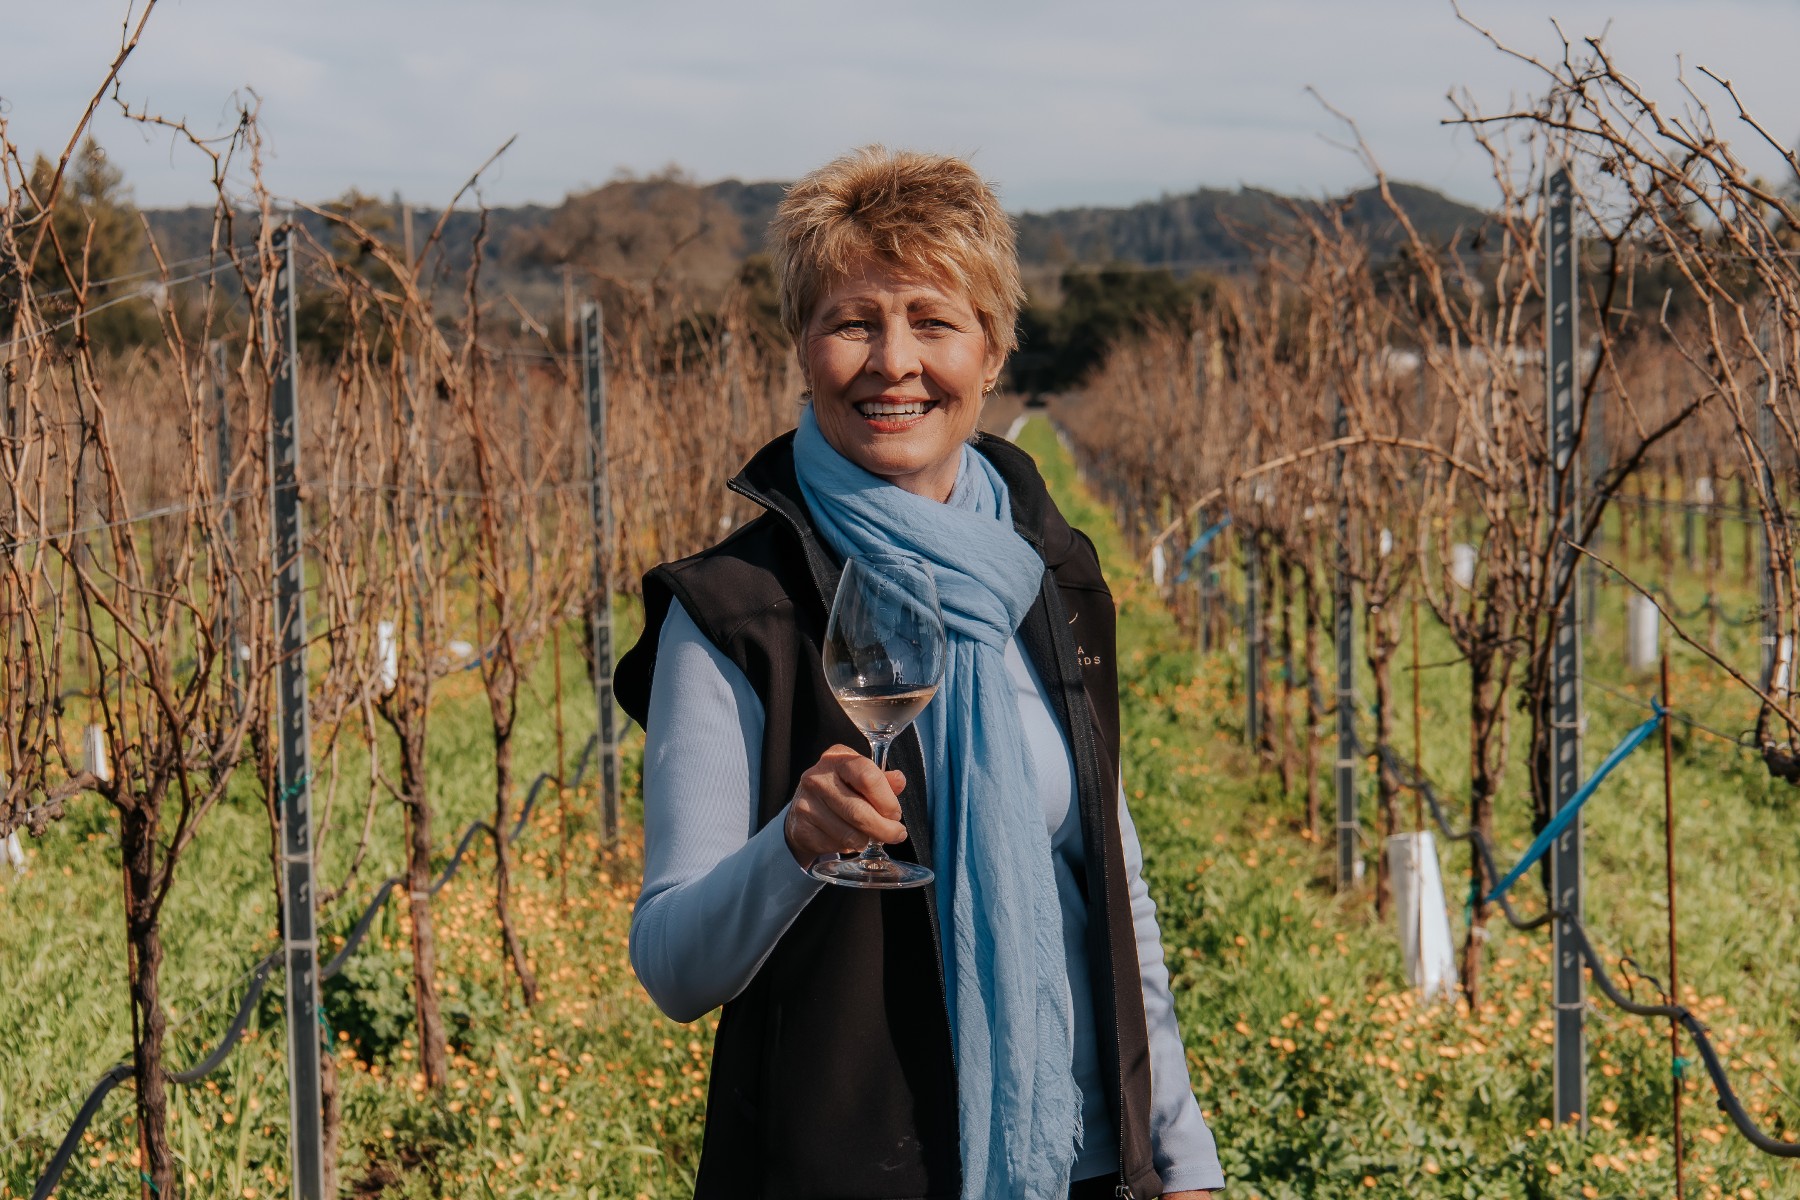 Amista Proprietor Vicky Farrow with Glass of Sparkling Wine in Vineyard